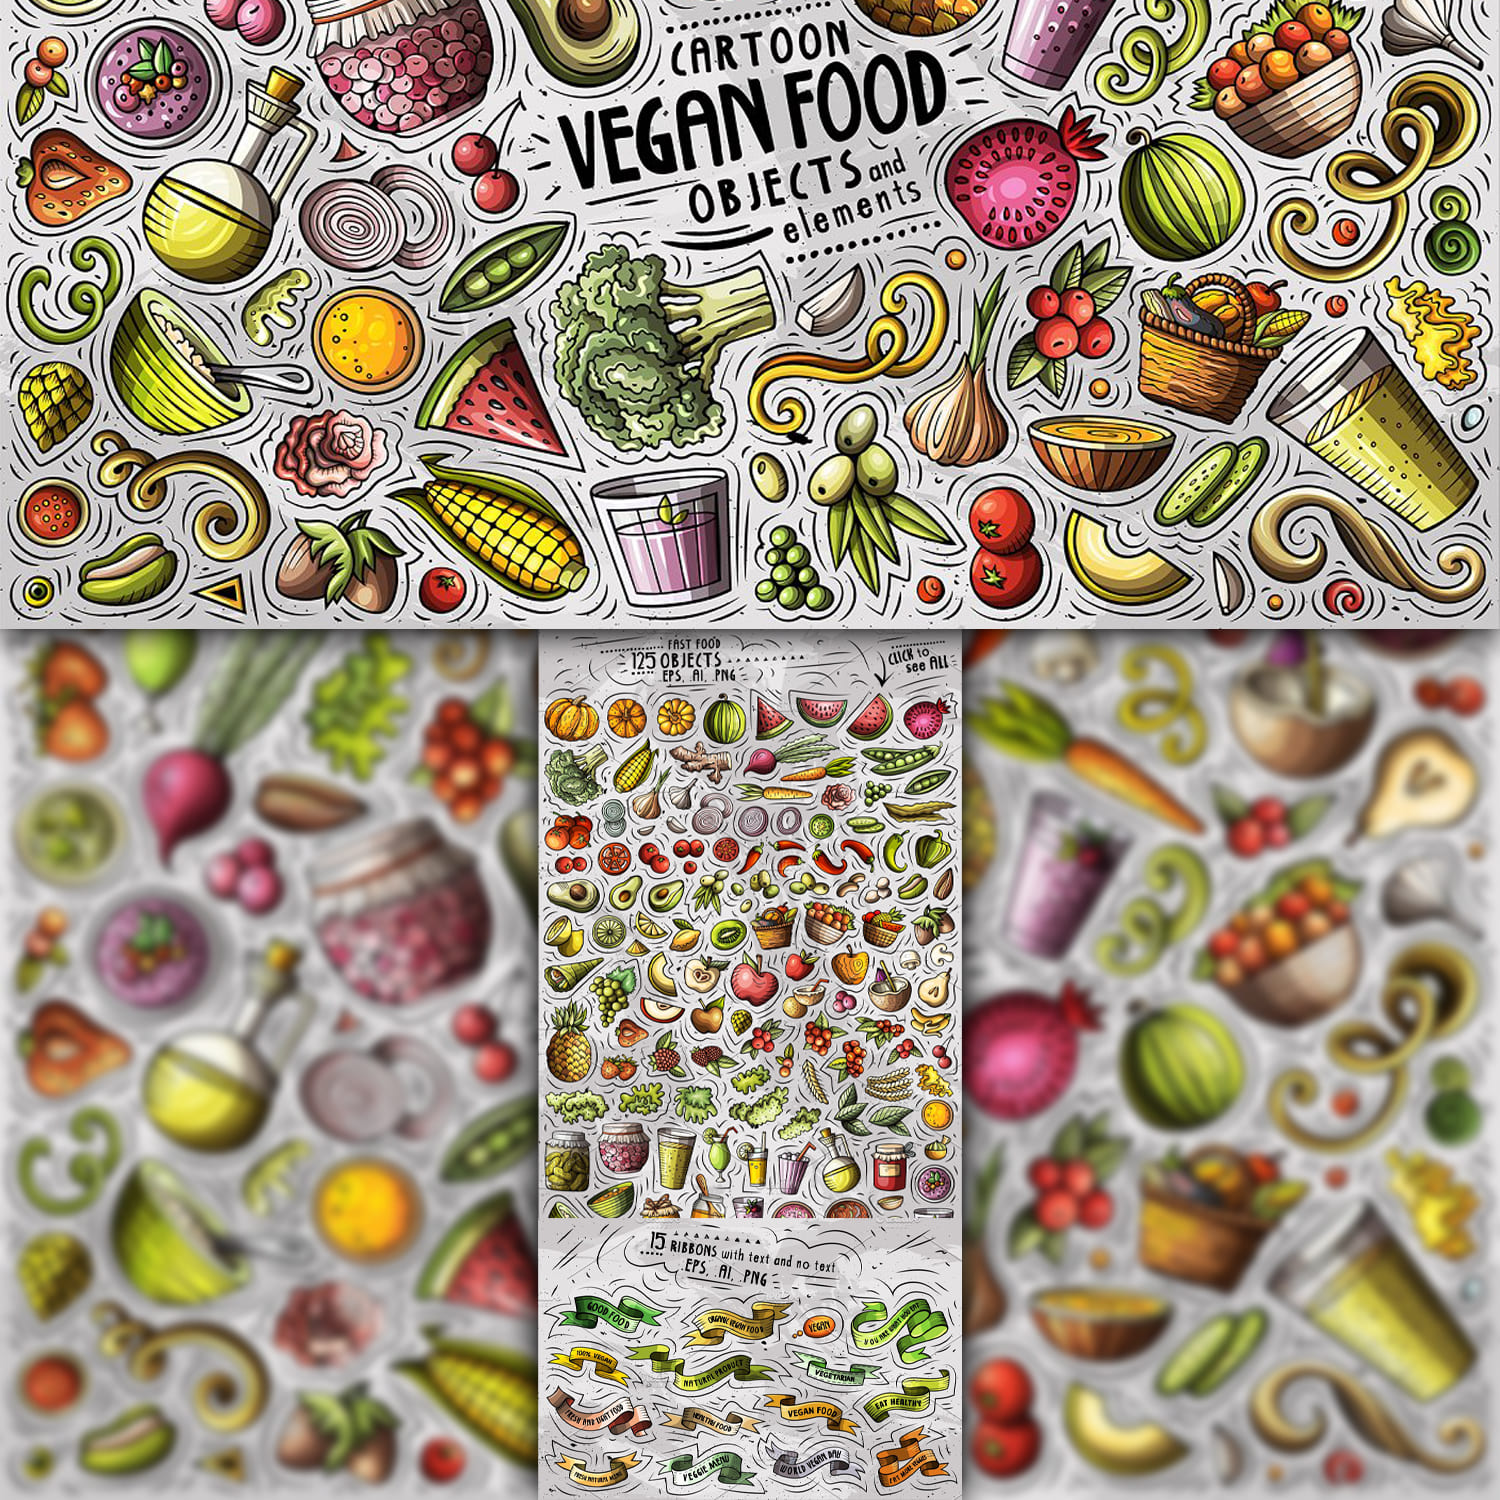 Vegan Food Cartoon Objects Set 1500 1500 2.